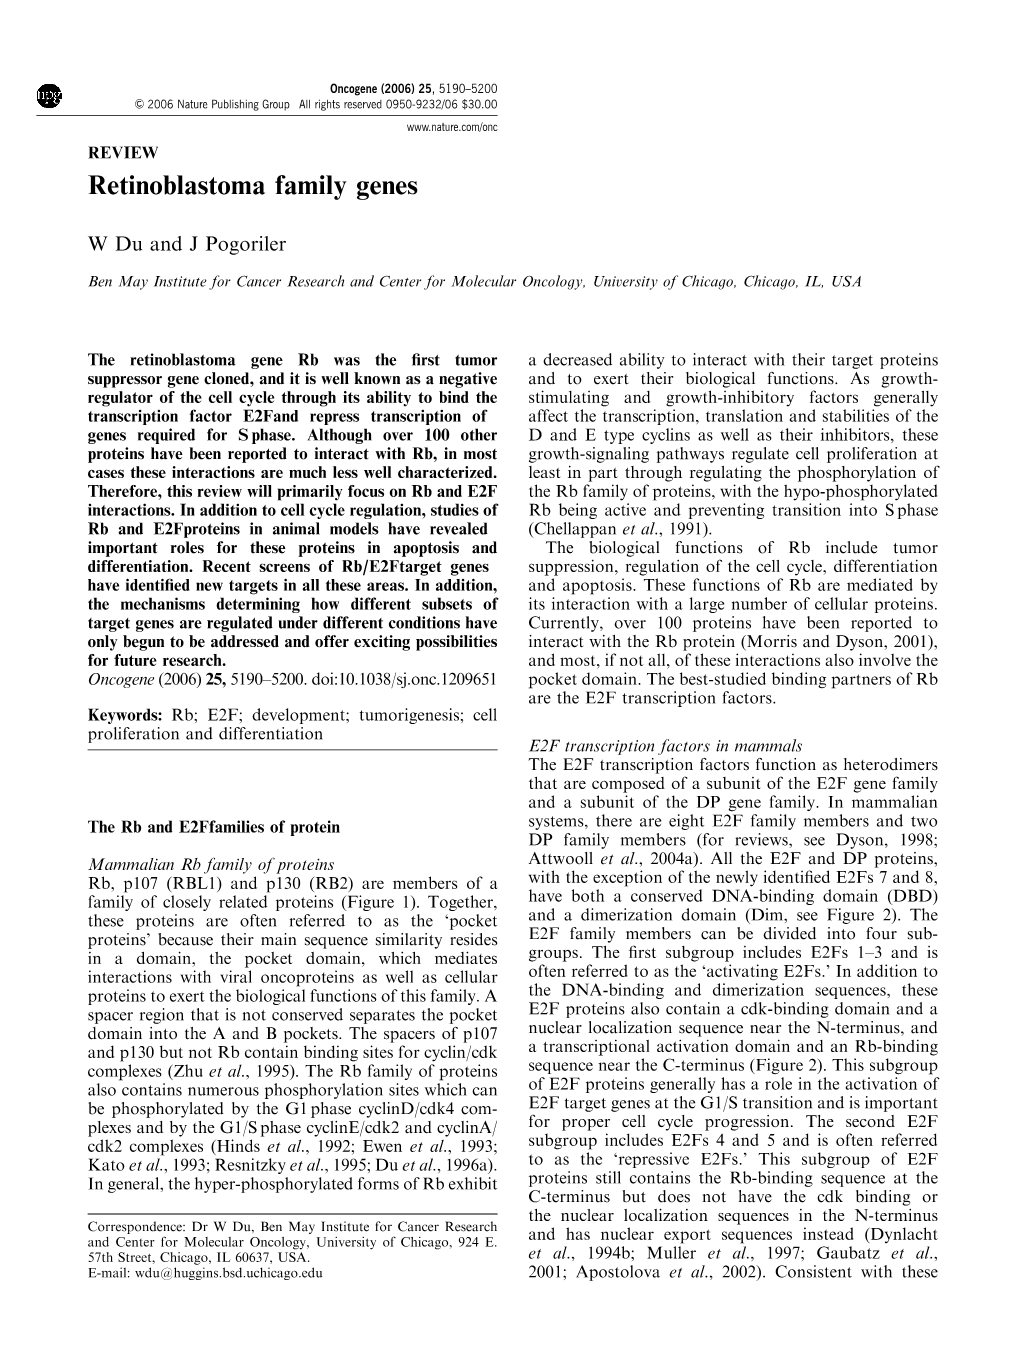 Retinoblastoma Family Genes